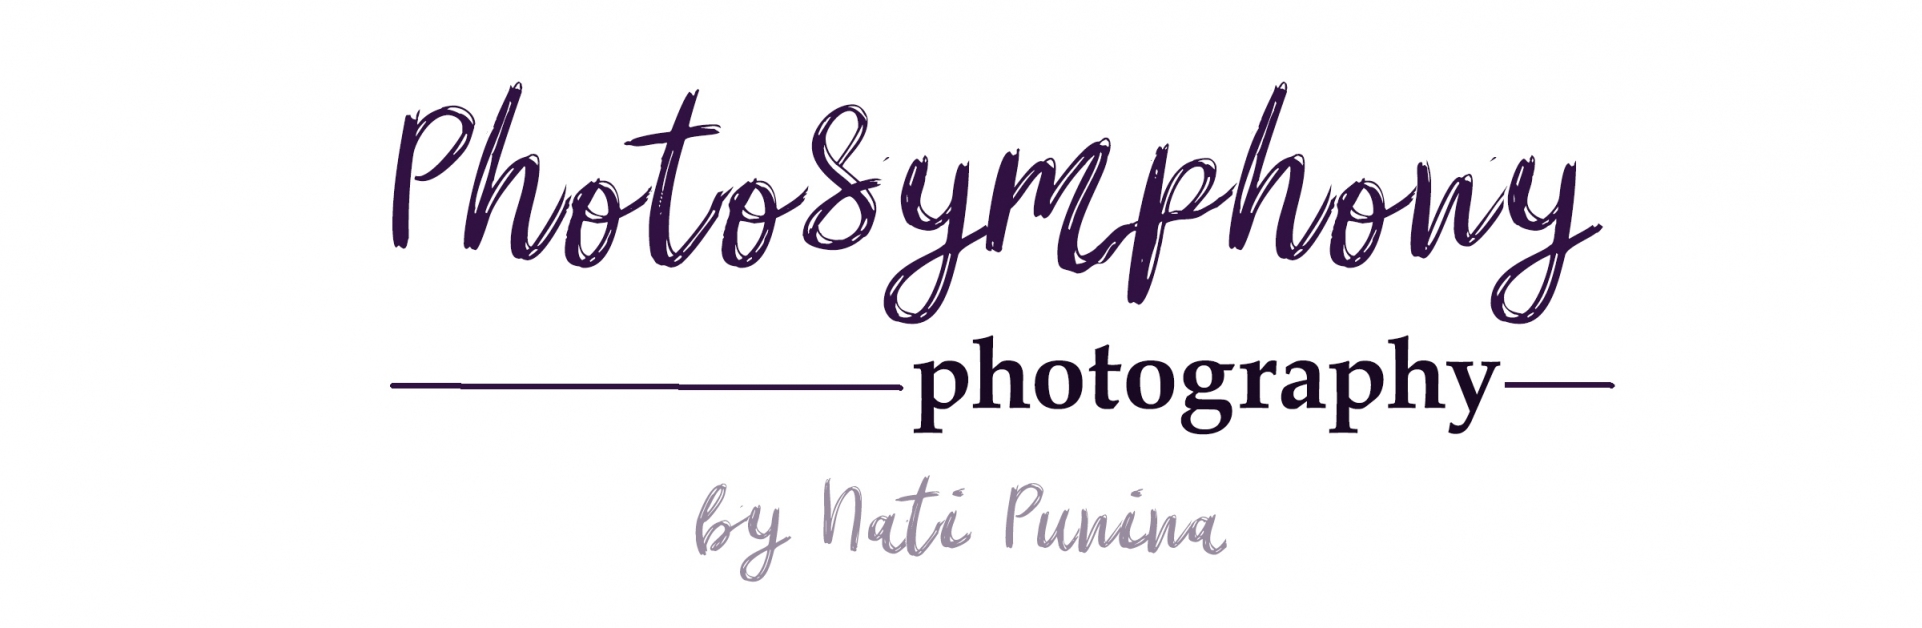 PhotoSymphony Photography by Nati Punina at Norwood, MA, USA  | Main page